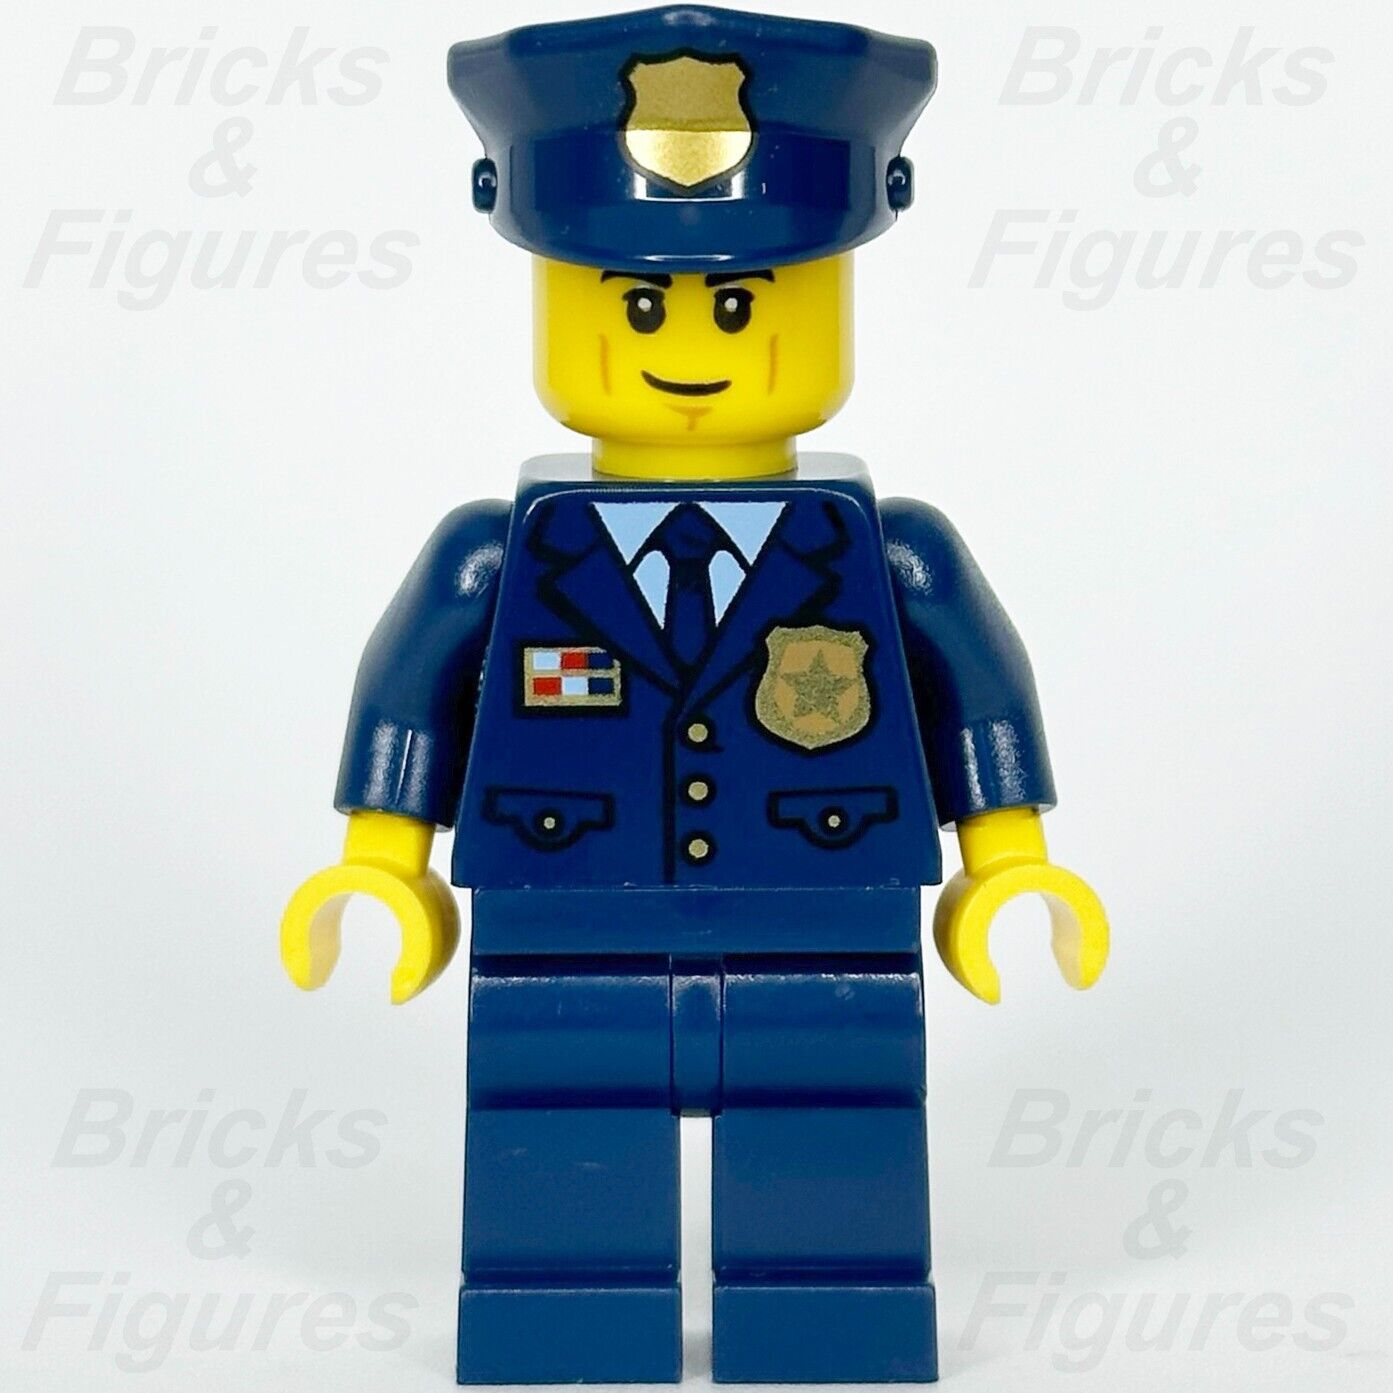 LEGO Police Officer 1940s Era Minifigure Smirk Creator Expert Town 10278 twn405 2